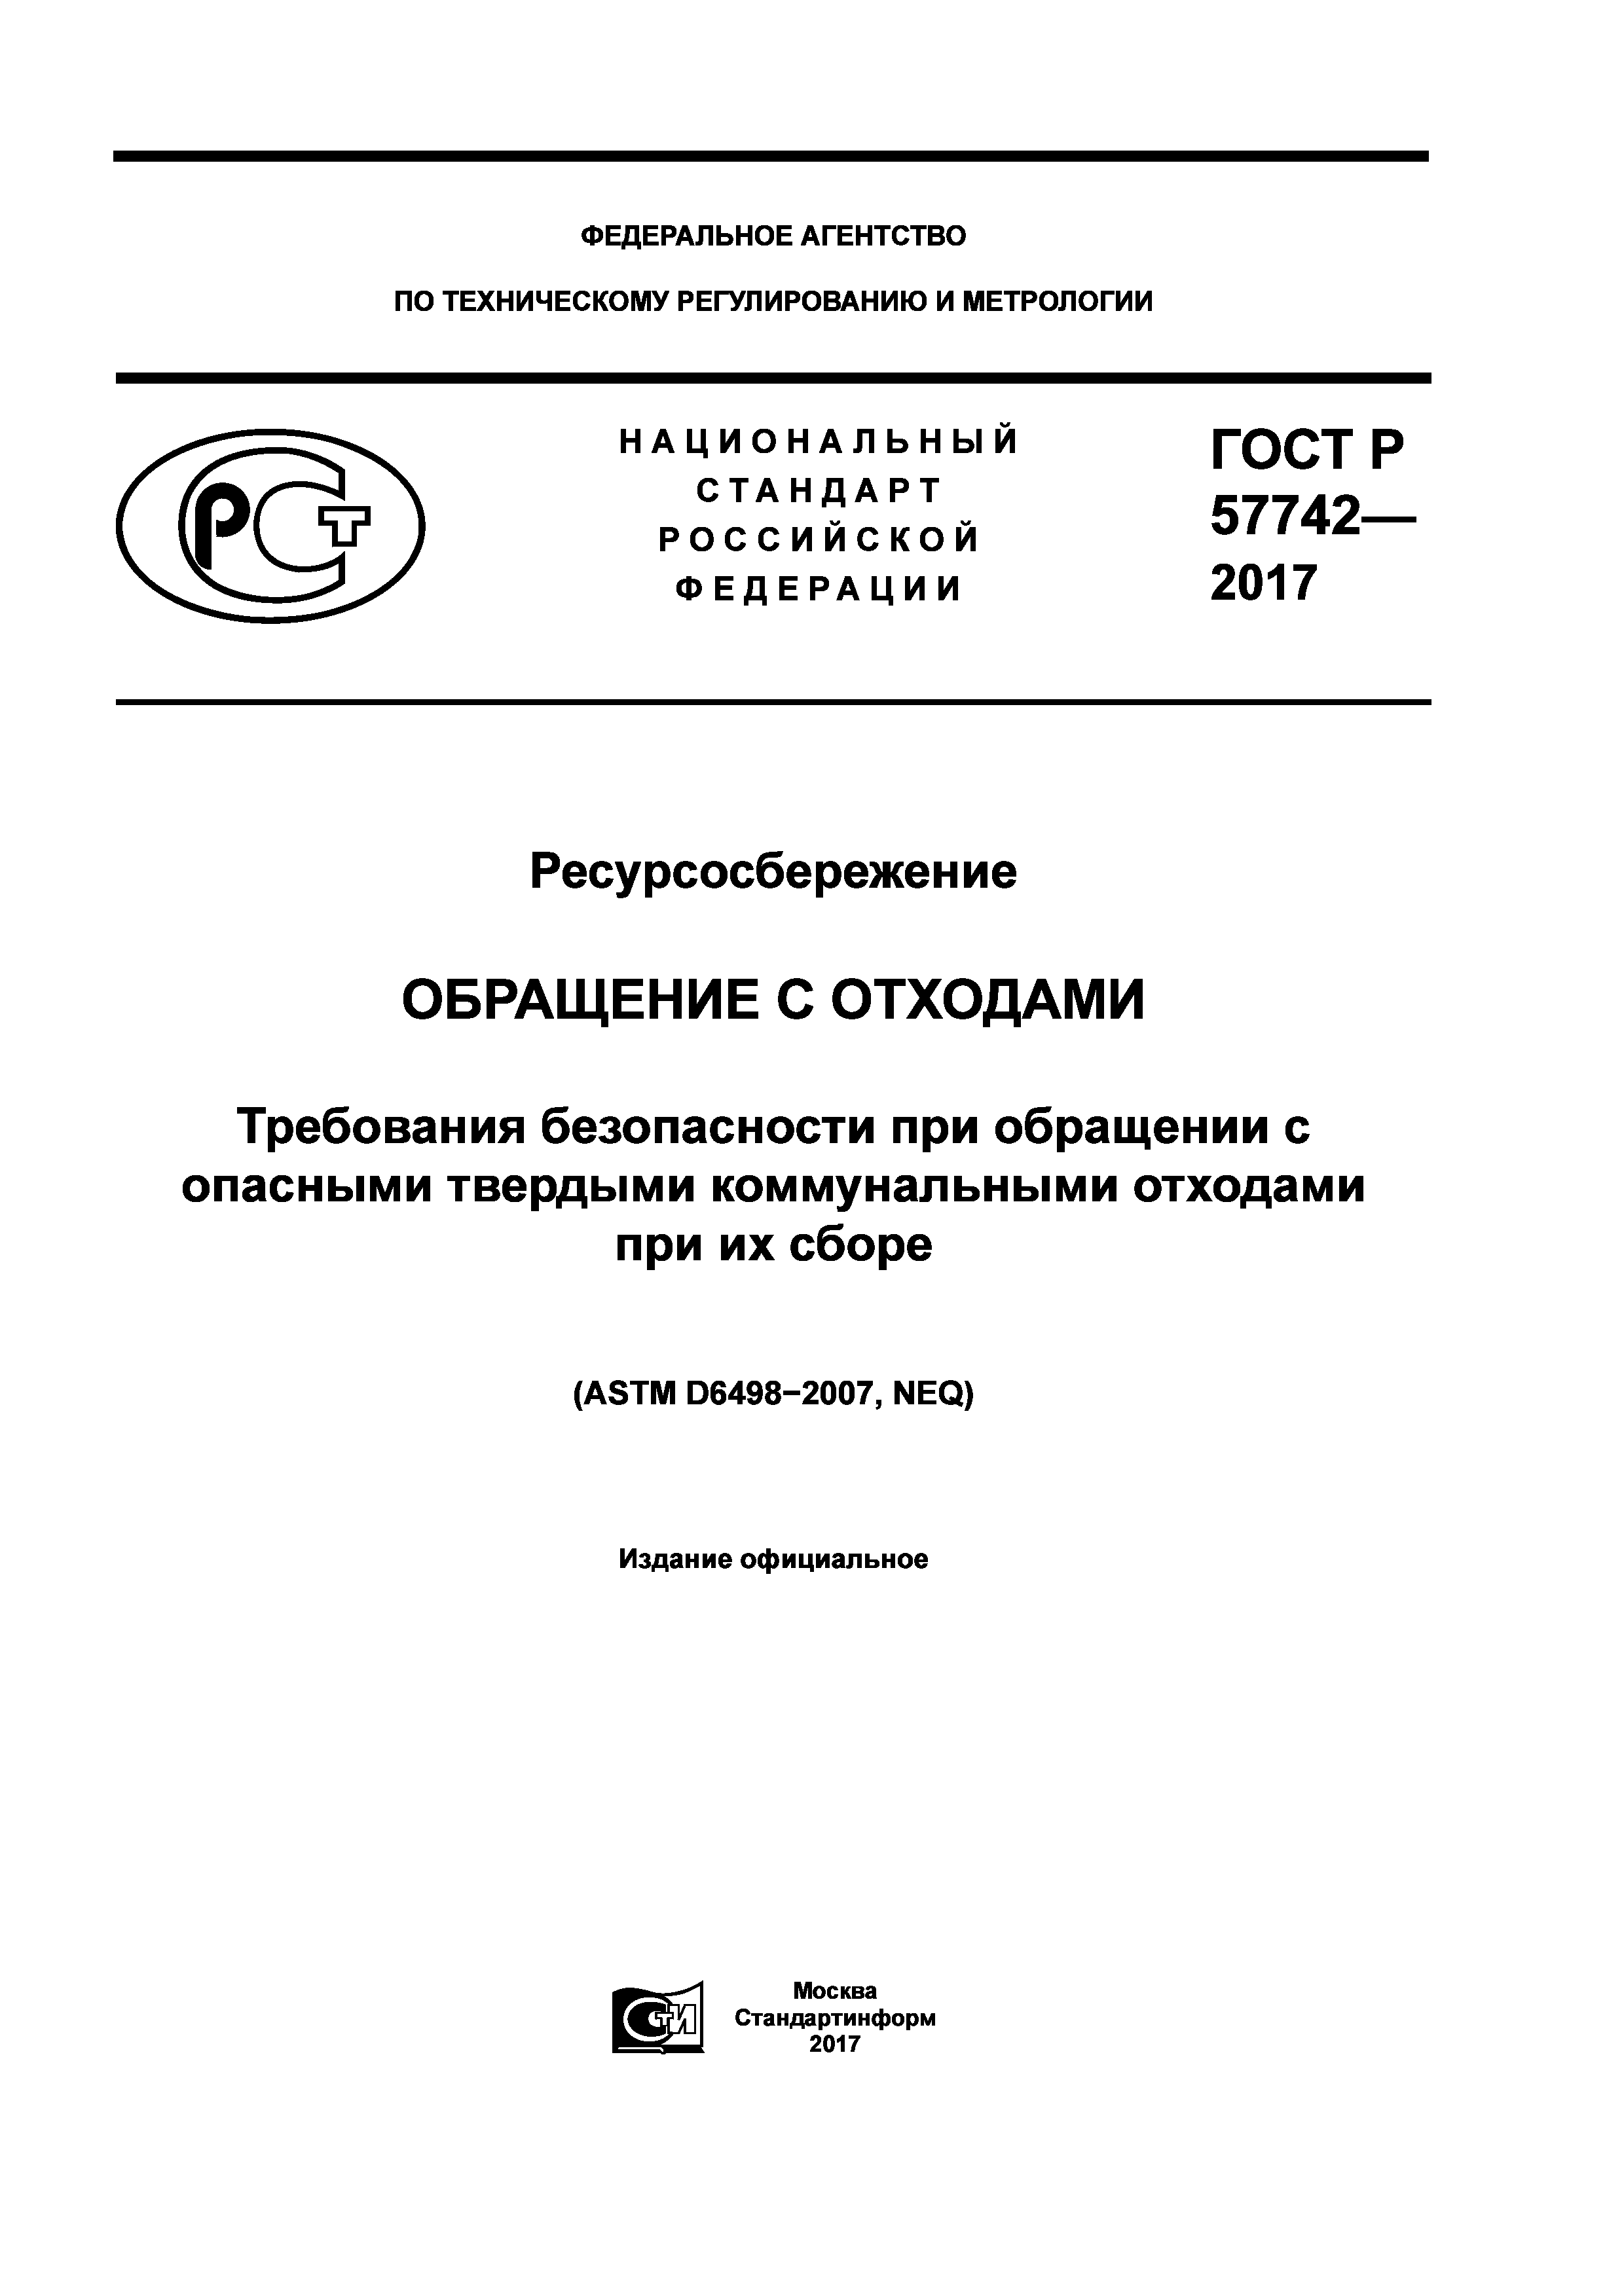 ГОСТ Р 57742-2017